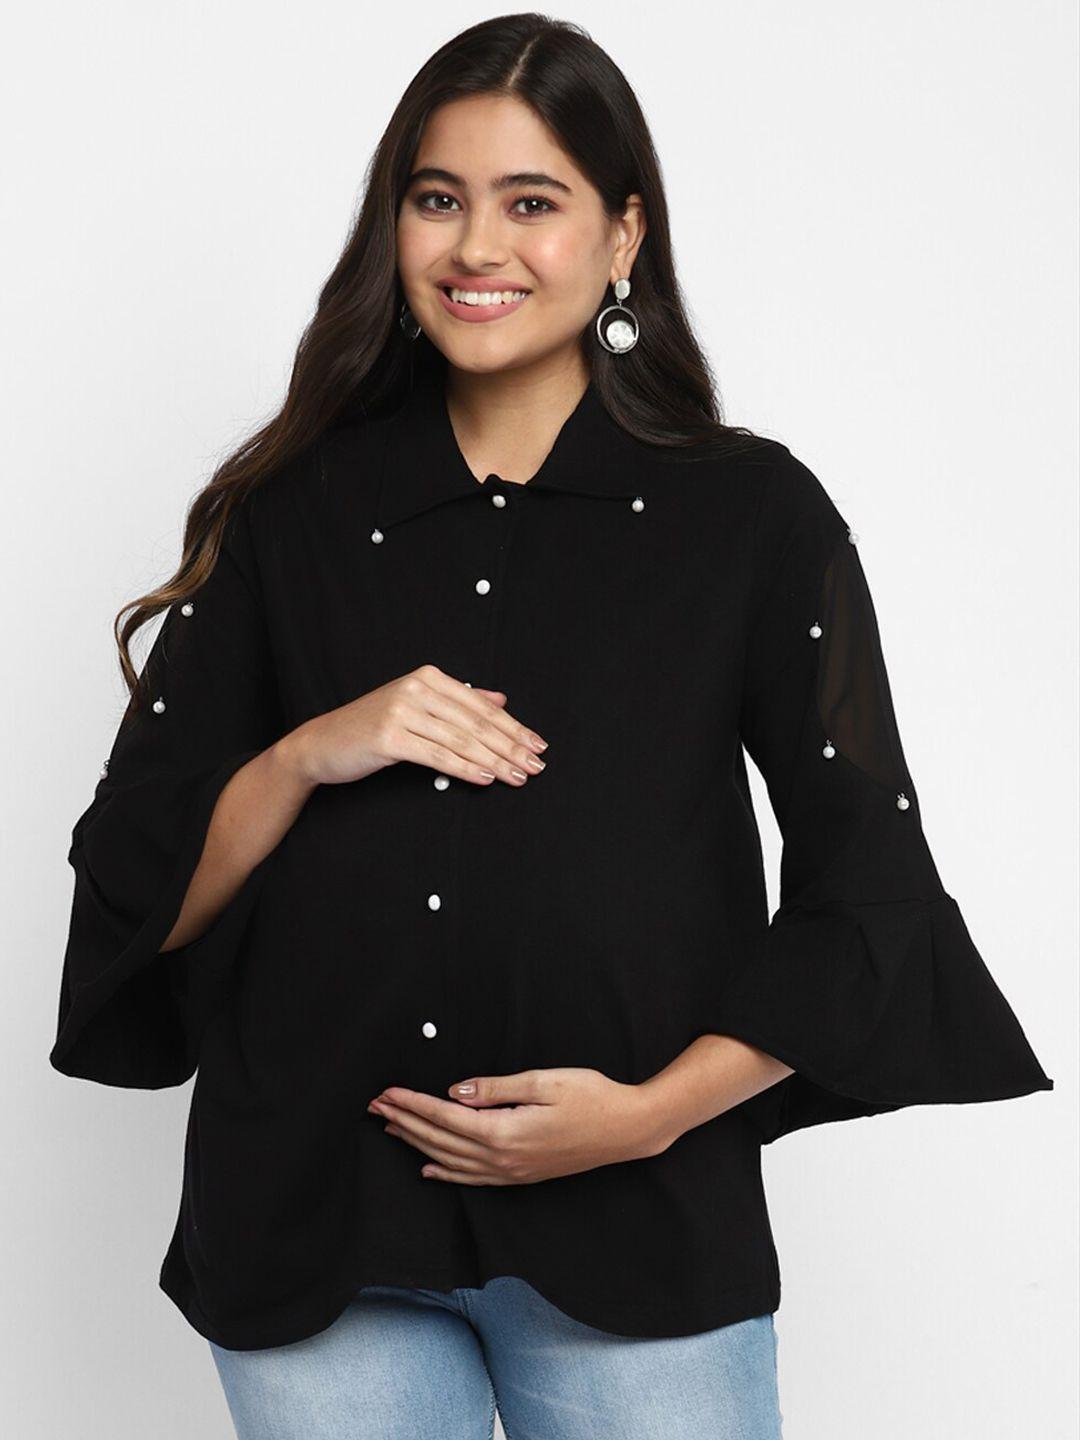 momsoon maternity black shirt style top